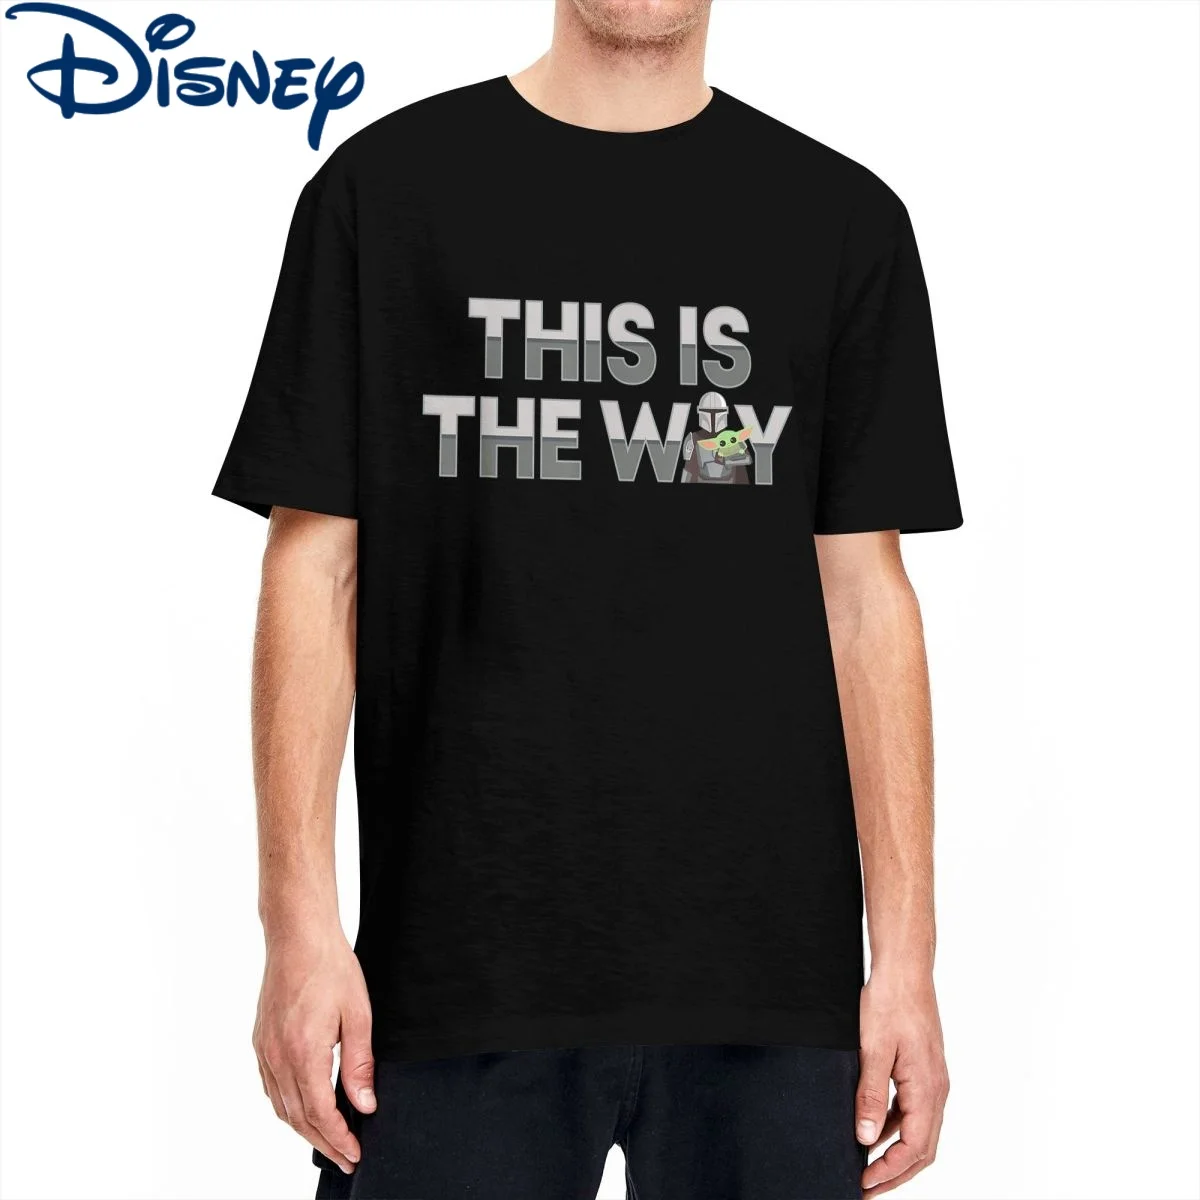 

Disney Star Wars The Mandalorian Mando Child Yoda T-Shirts Men This Is The Way Cotton Tees Short Sleeve T Shirts Plus Size Tops